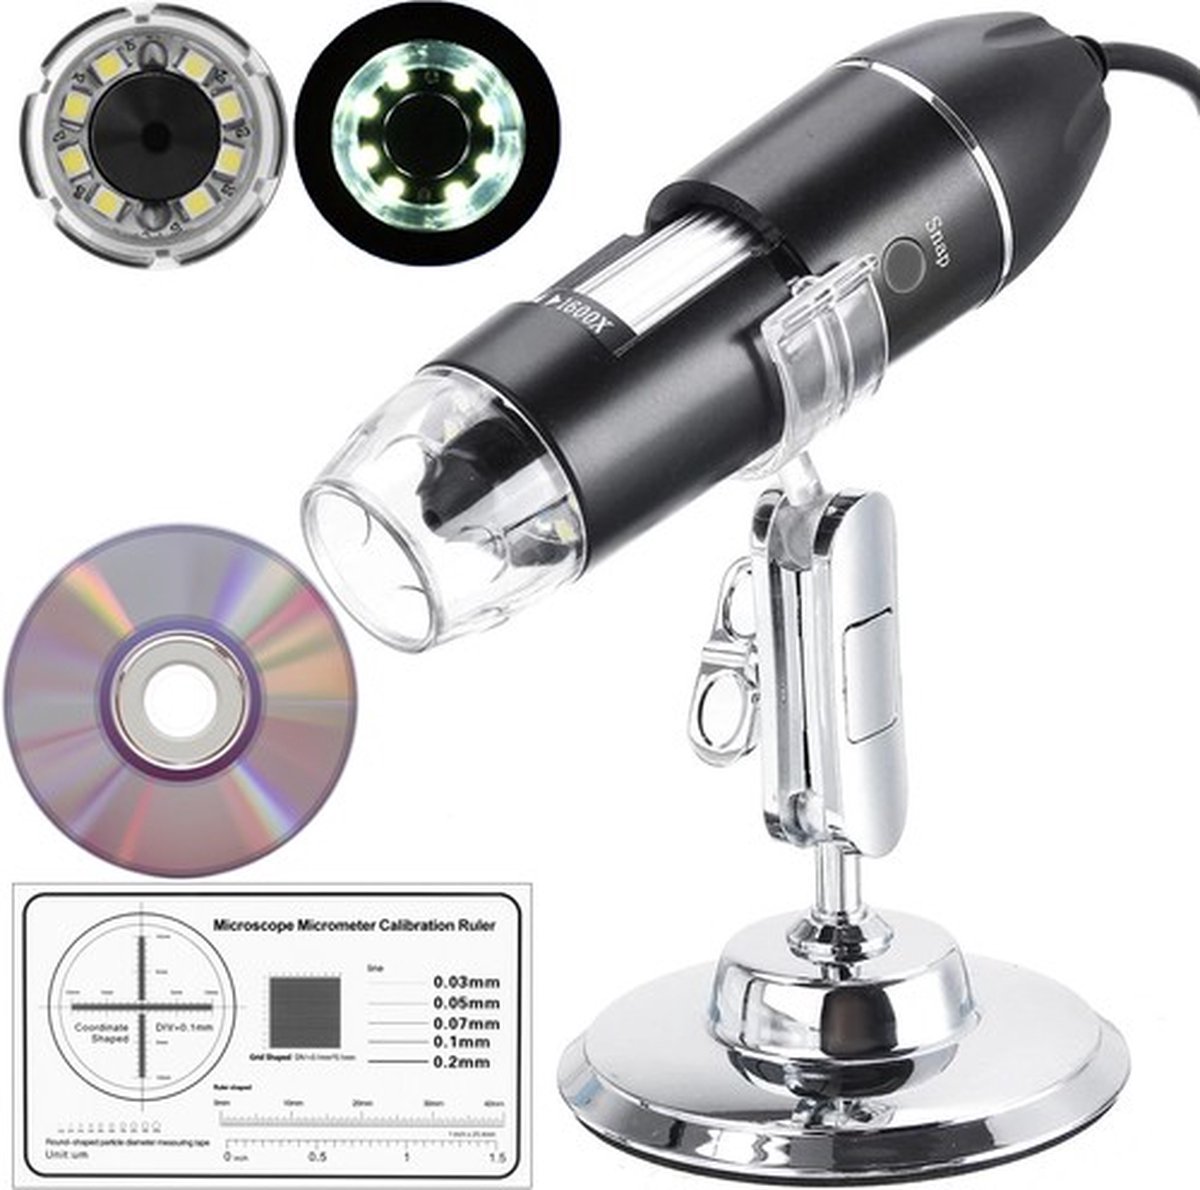 Microscope numérique avec caméra - Zoom 1600x - Microscopie - Endoscope -  Photo 